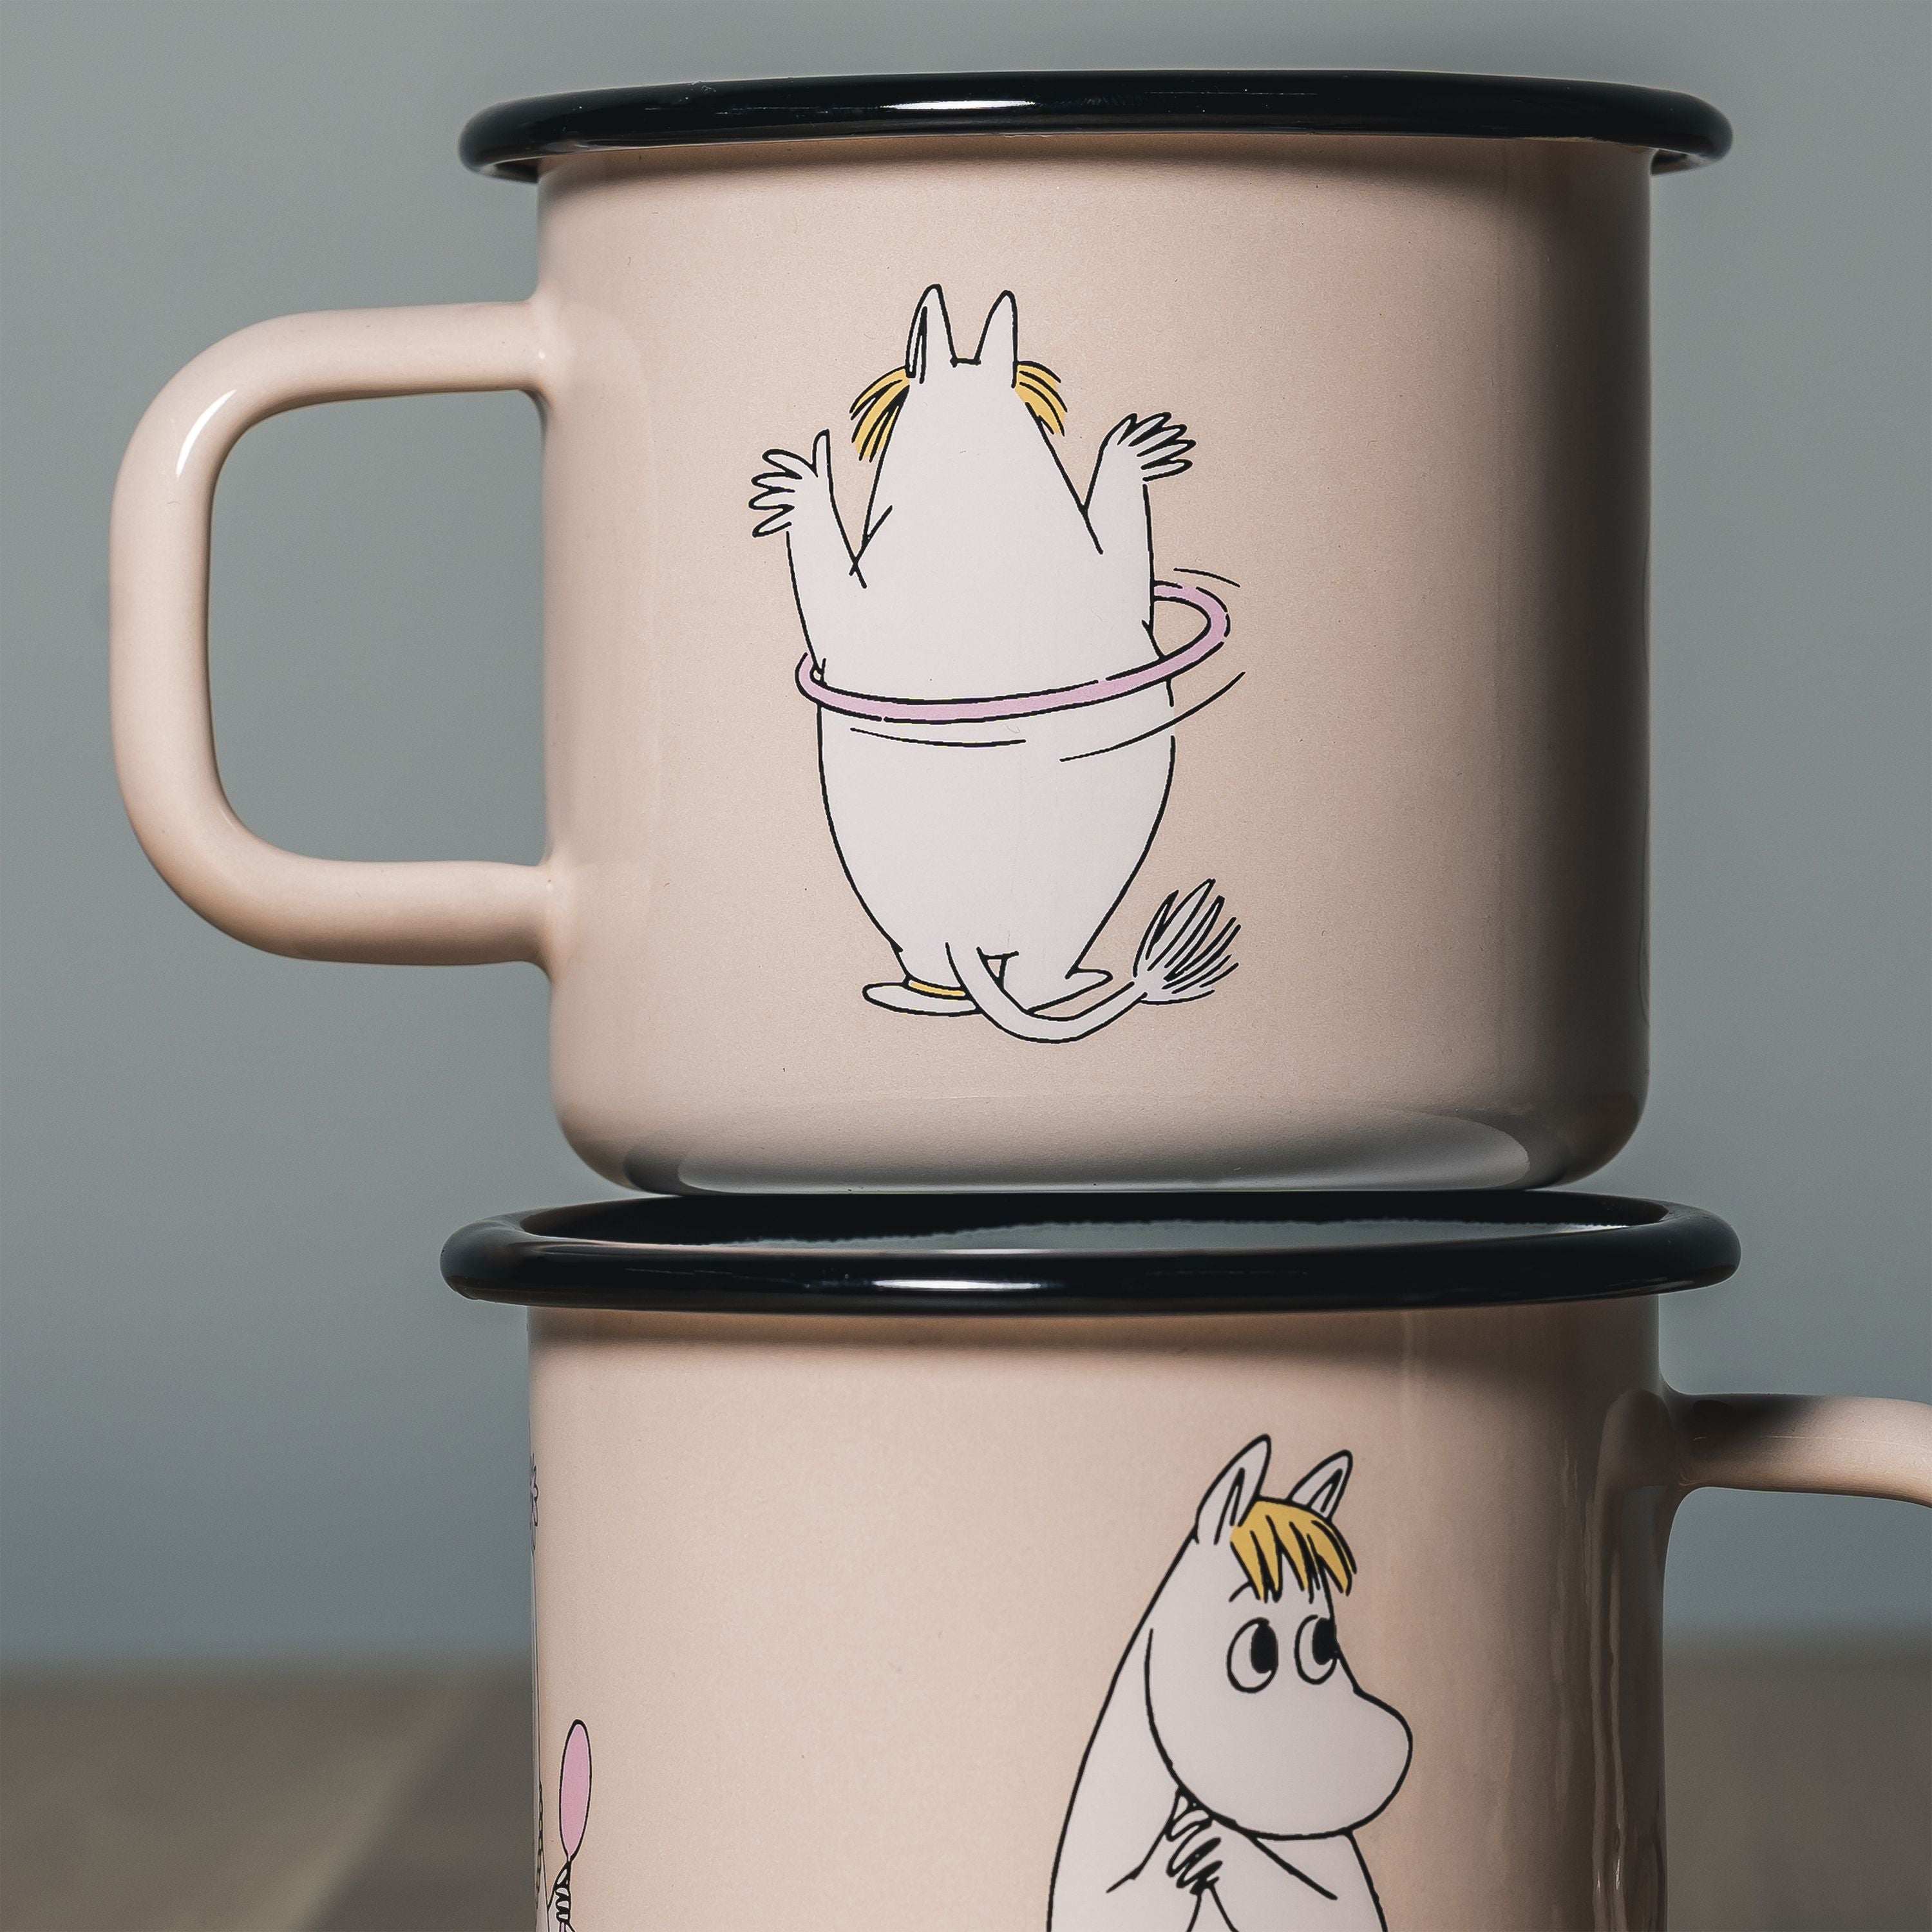 Muurla Moomin Retro Retro搪瓷杯，浮潜，米色